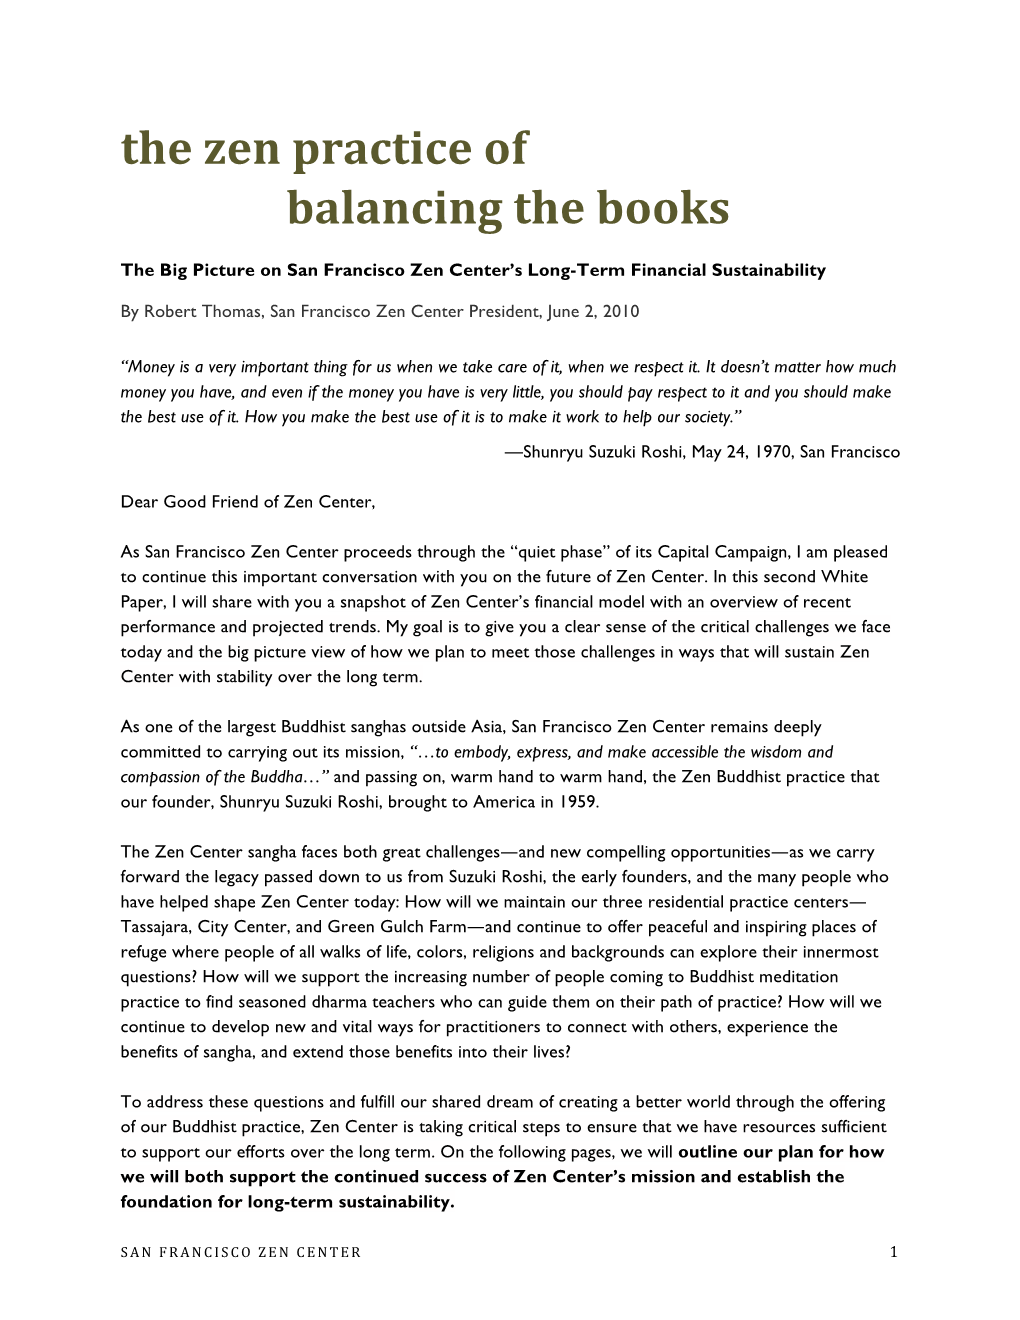 The Zen Practice of Balancing the Books